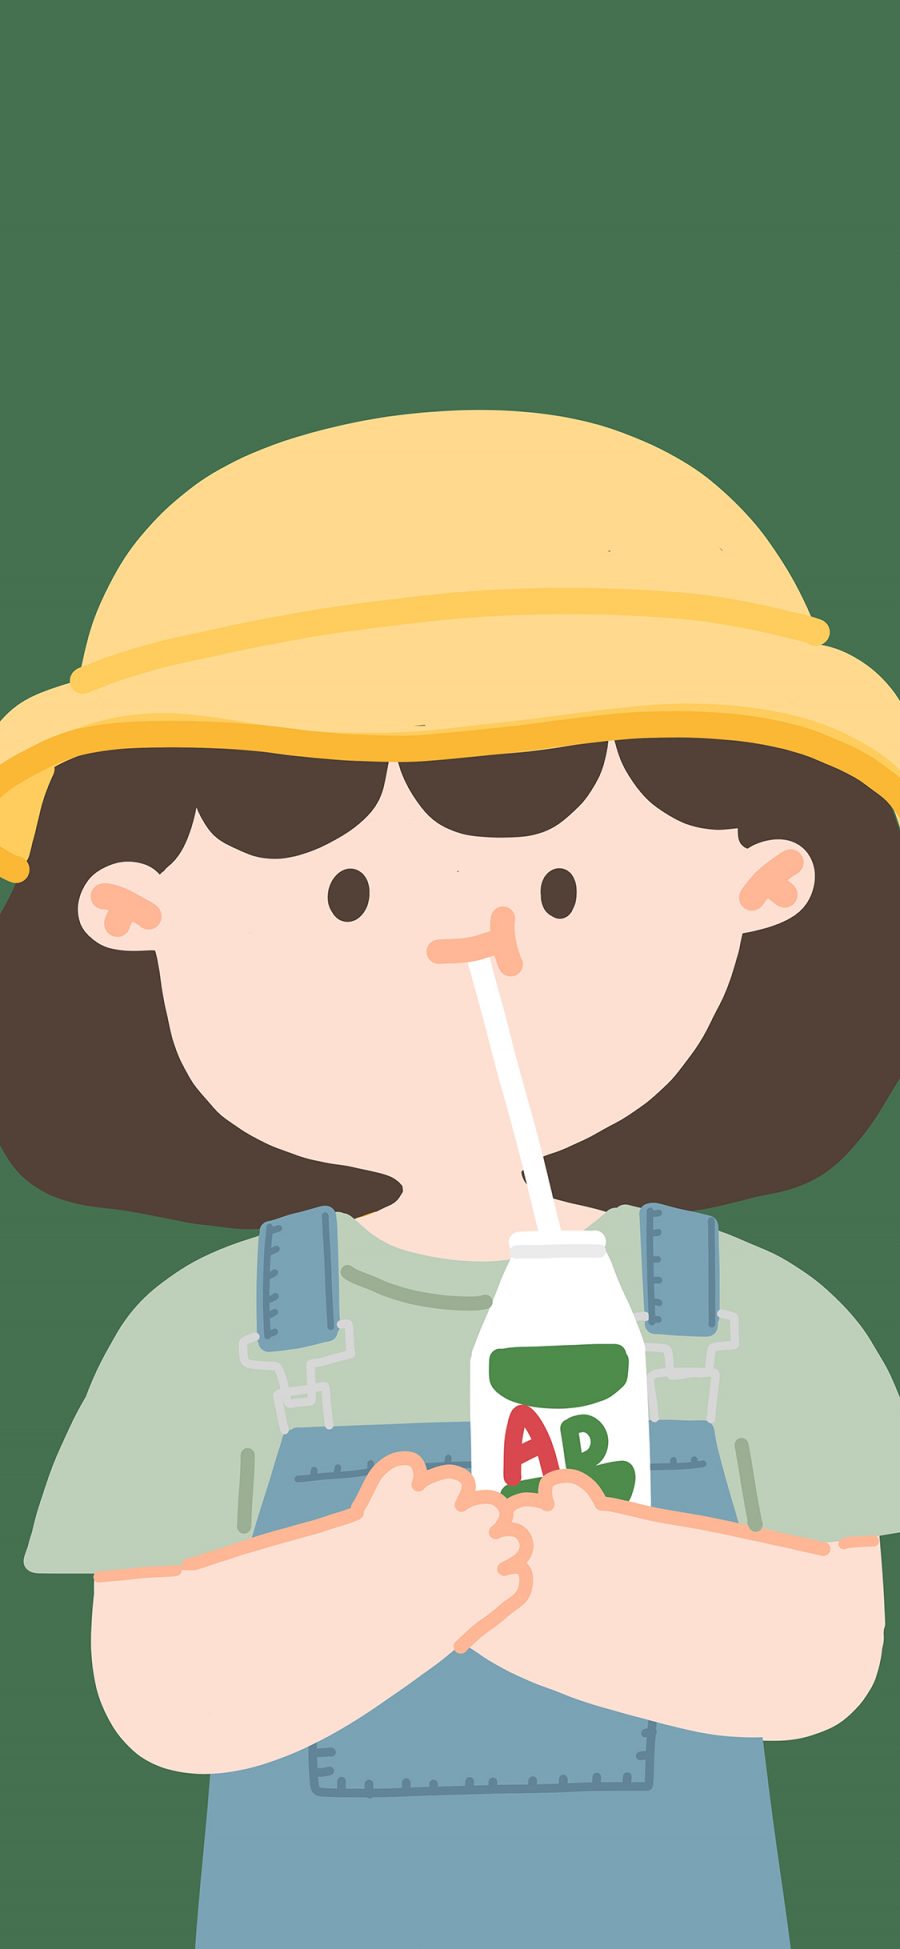 [2436×1125]AD钙奶 小女孩 吸管 饮料 绿色 苹果手机动漫壁纸图片